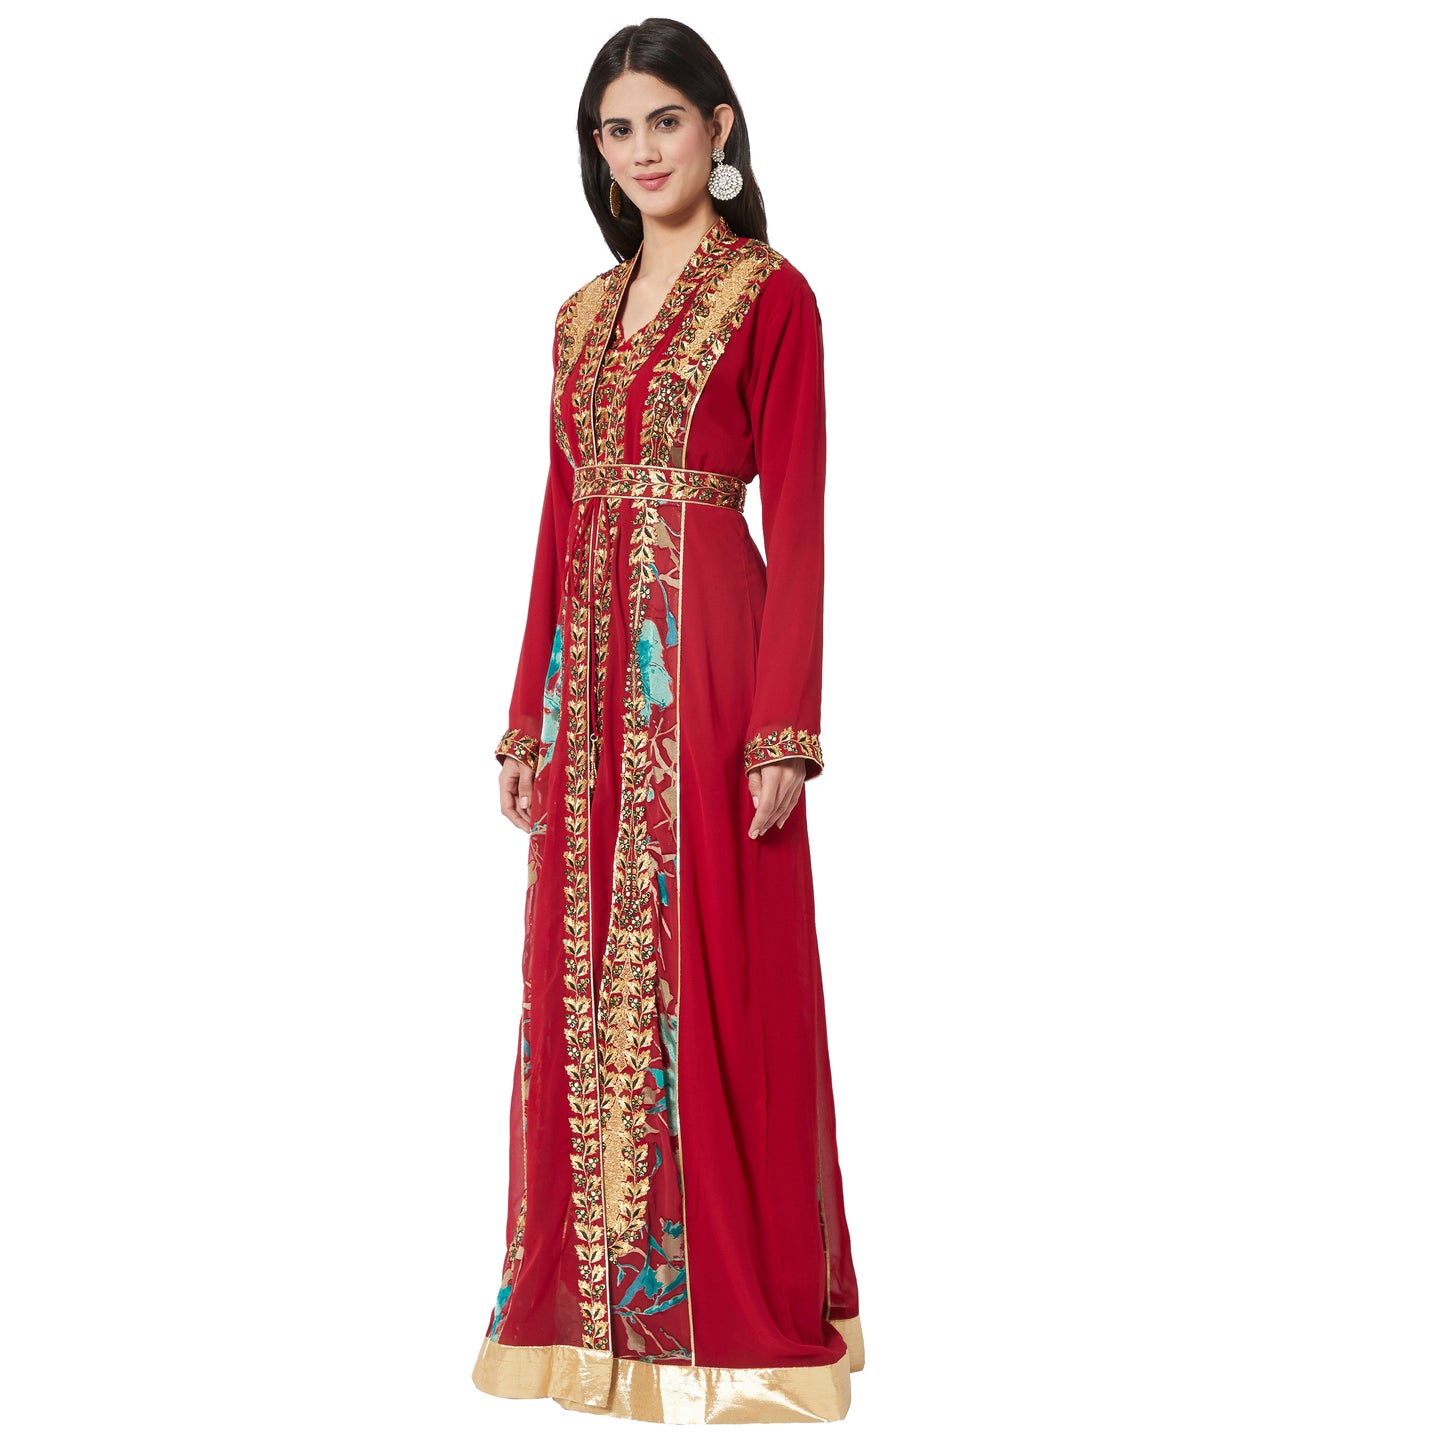 Jellabiya Maxi Dress With Traditional Golden Embroidery Dress - Maxim Creation